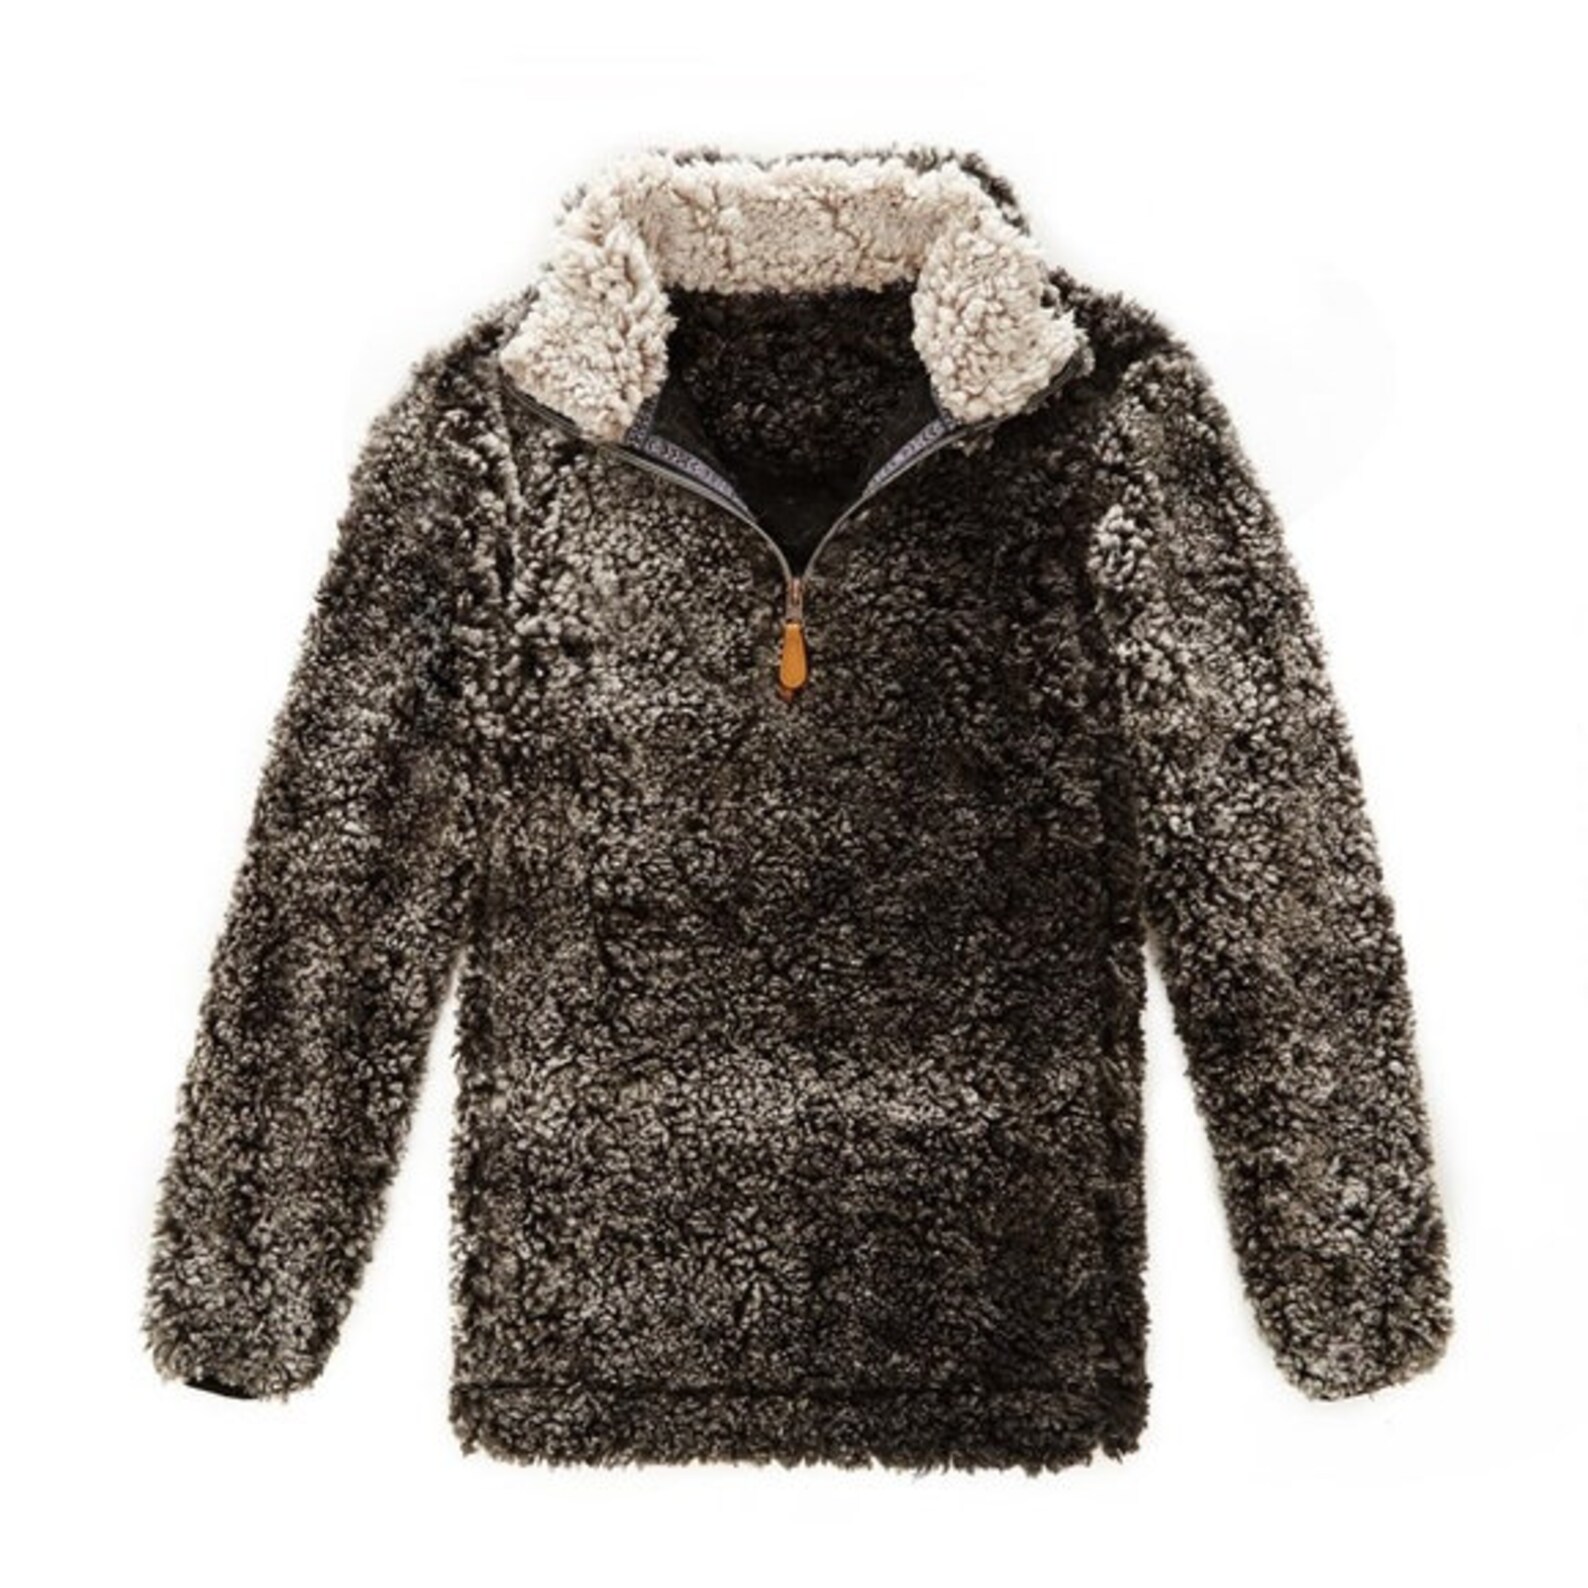 New Katydid Black sherpa fleece sweatshirt pullover M L XL XXL | Etsy